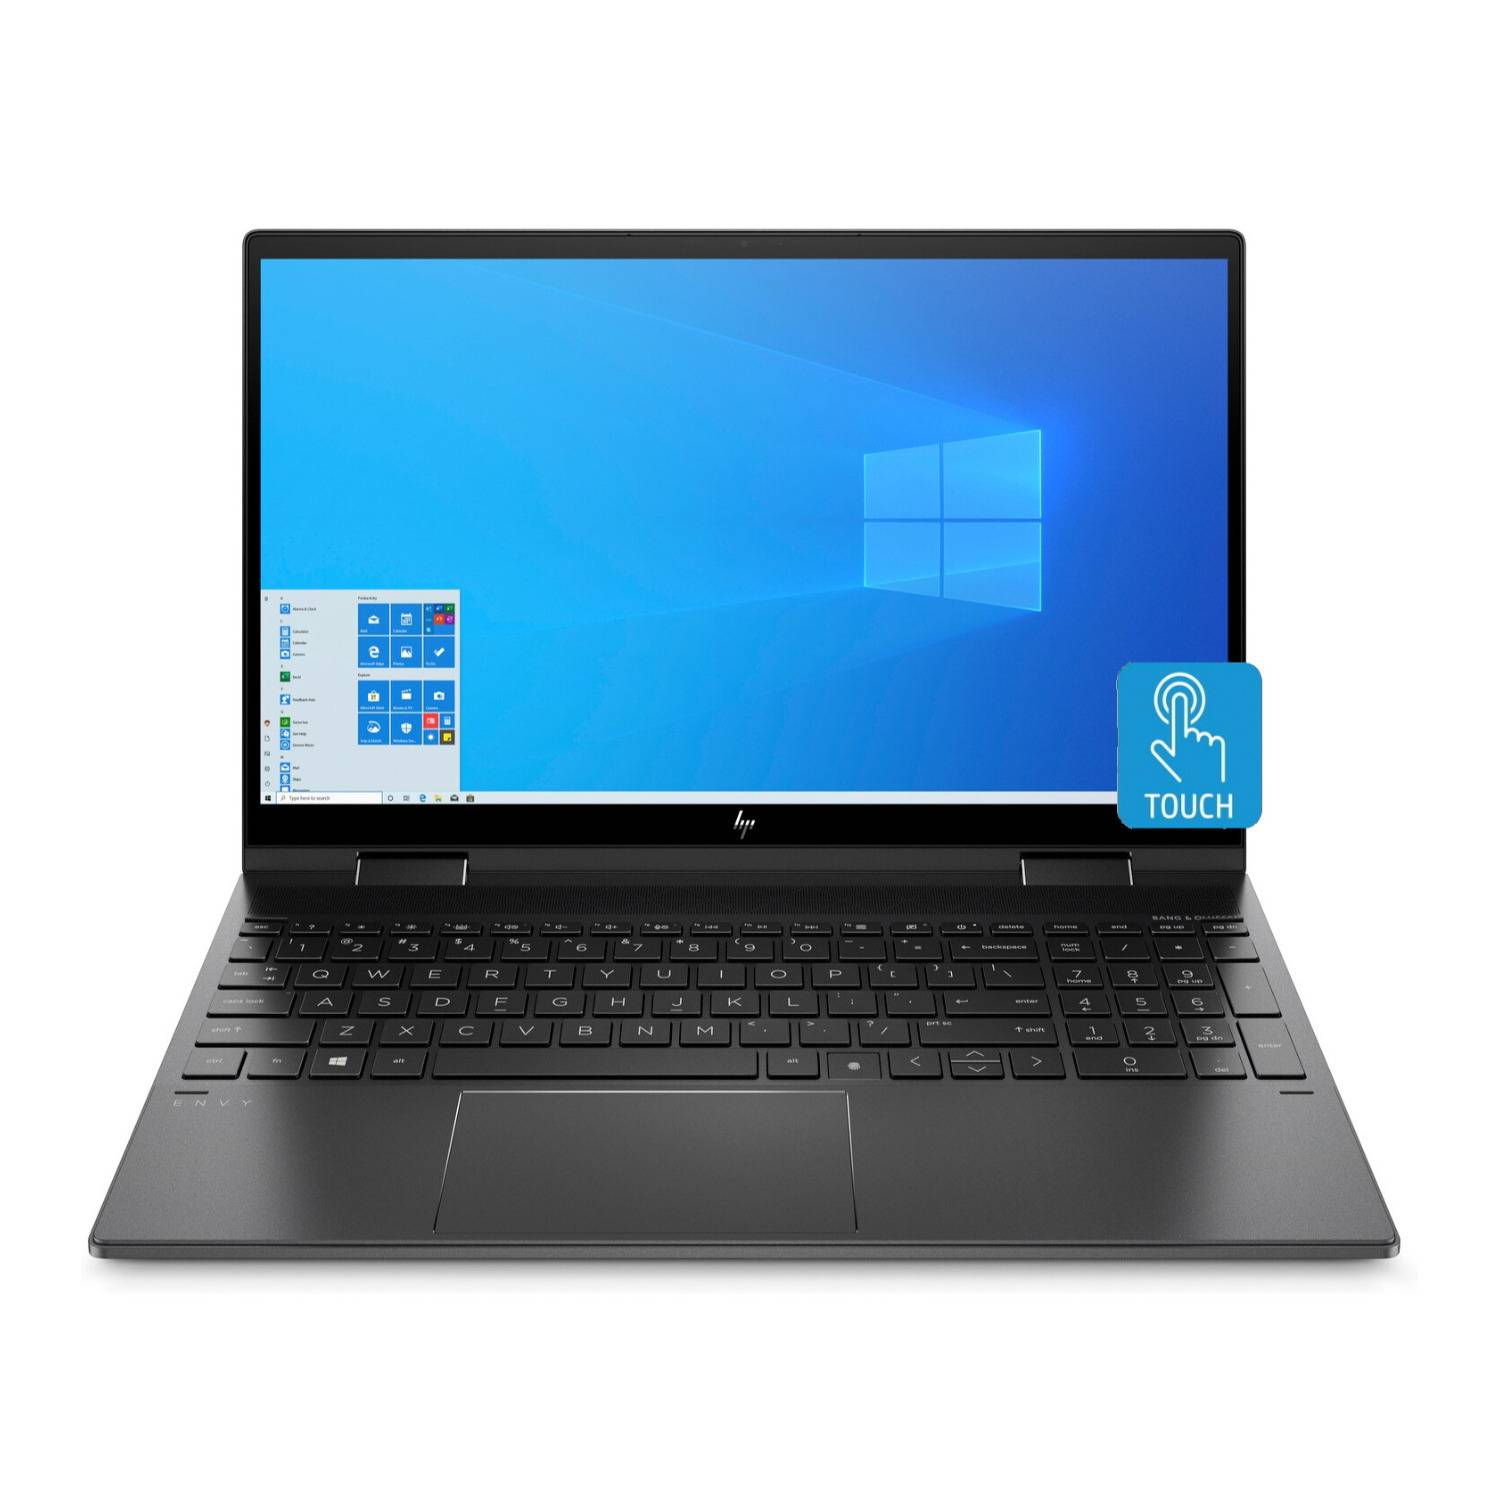 HP Envy x360 15M 15.6-Inch Full HD Touch WLED AMD Ryzen 5 4500U 8GB 256GB SSD Win 10 Convertible Laptop